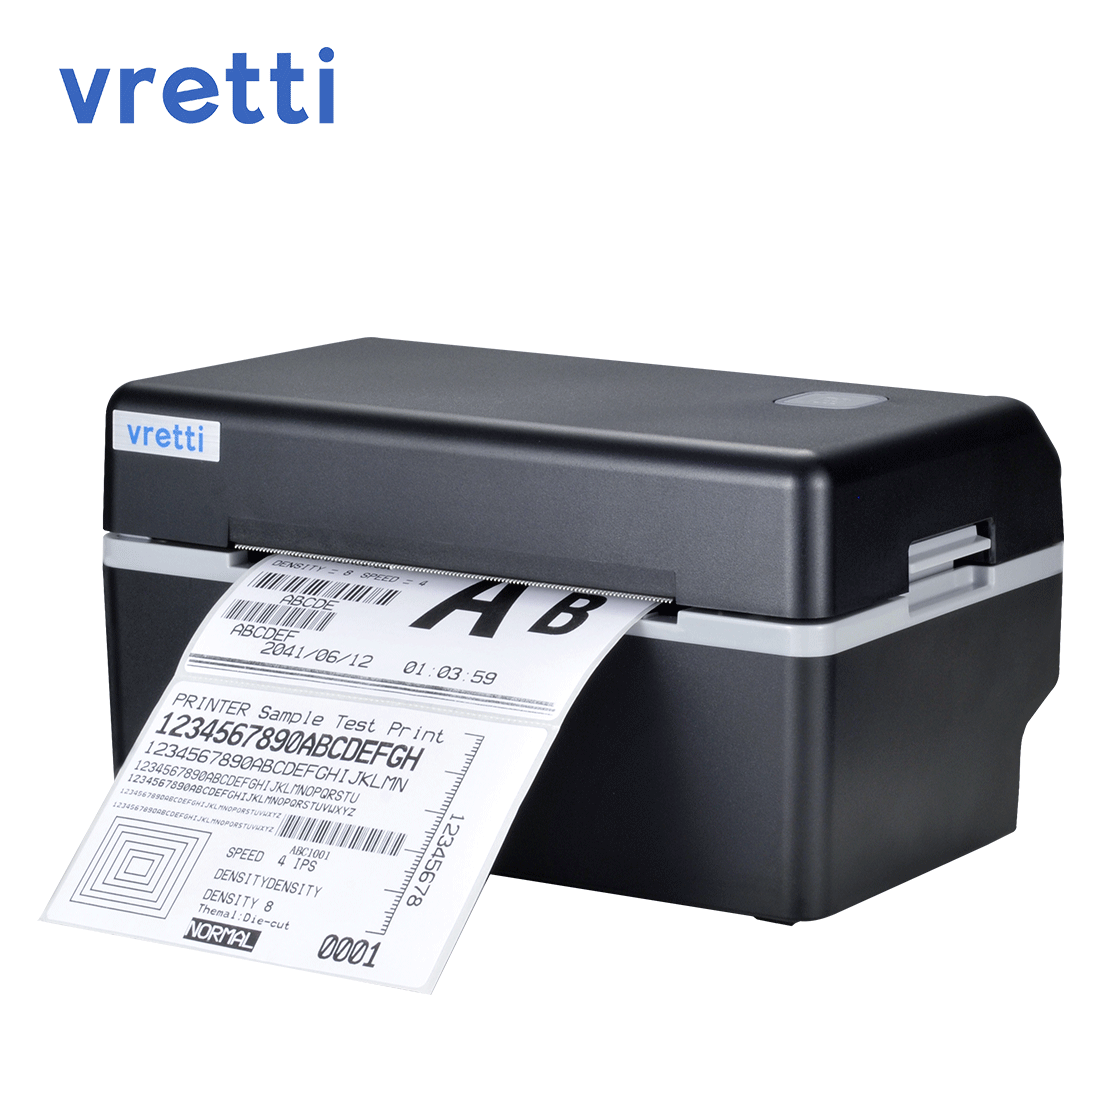 VRETTI Thermal Label Printer 4x6 Shipping Label Printer USB Printing High  Speed | eBay